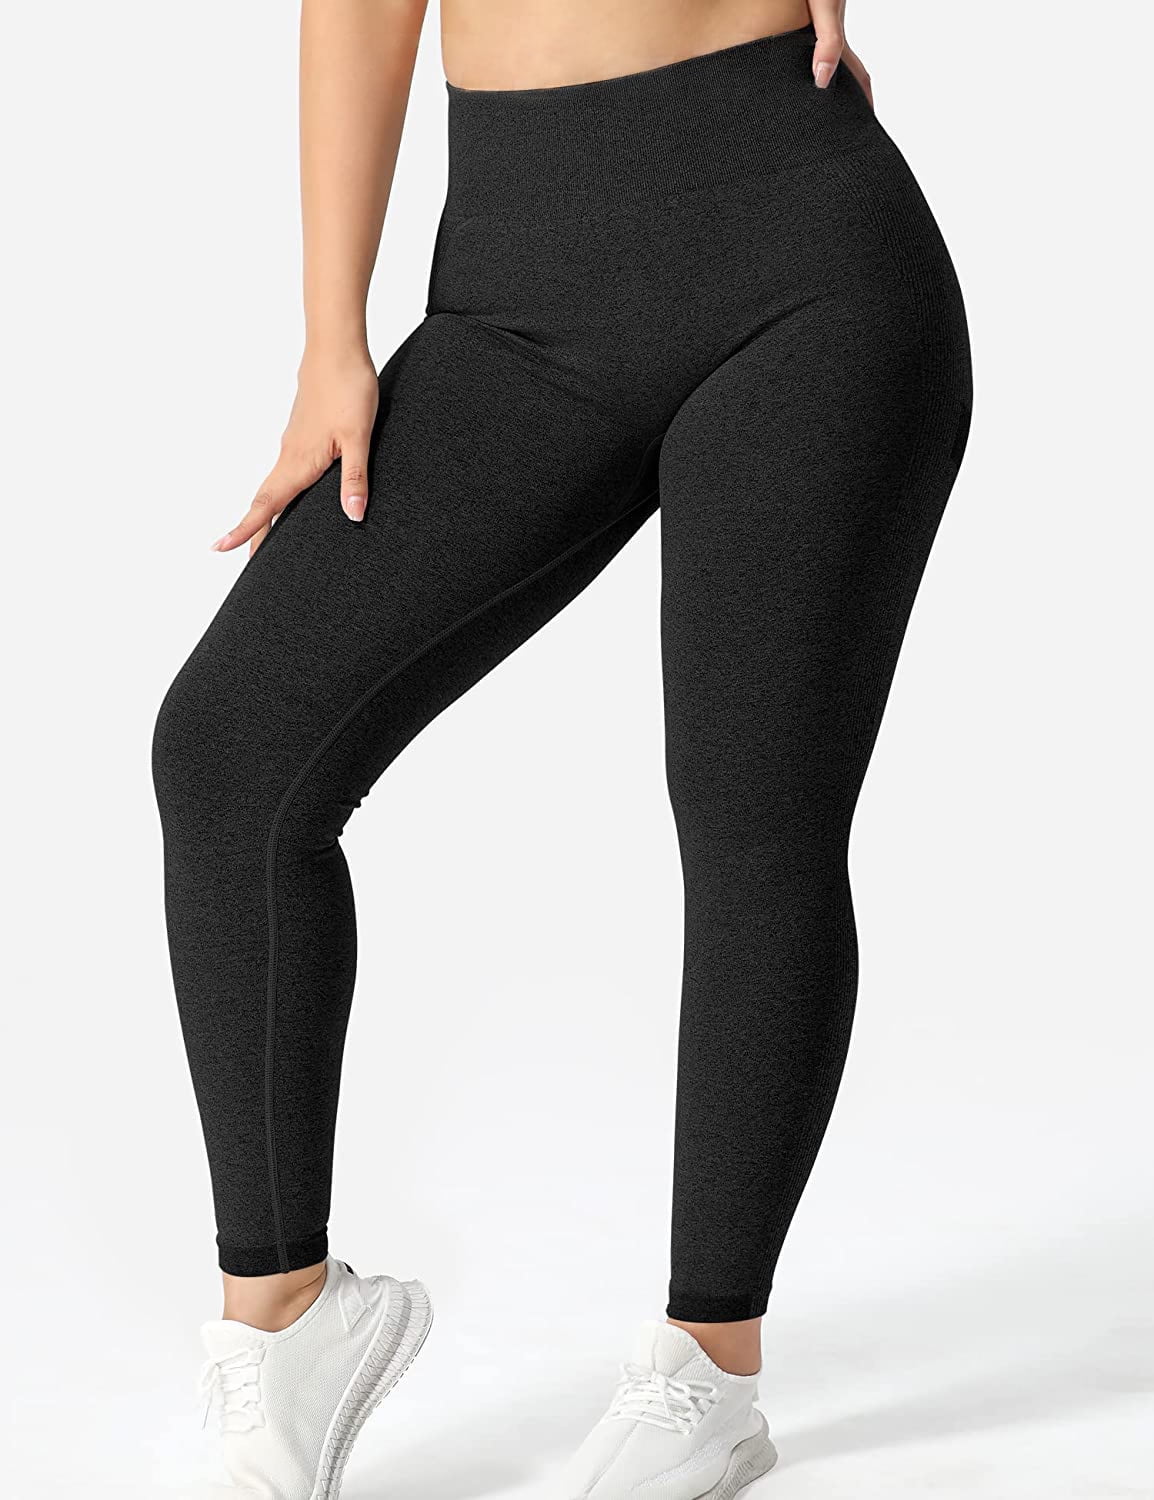 CHRLEISURE Butt Lifting Workout Leggings for Women, Scrunch Butt Gym  Seamless Booty Tight (AMZ025, Black XL), 1 Hidden Pocket & Black, XL price  in Saudi Arabia,  Saudi Arabia